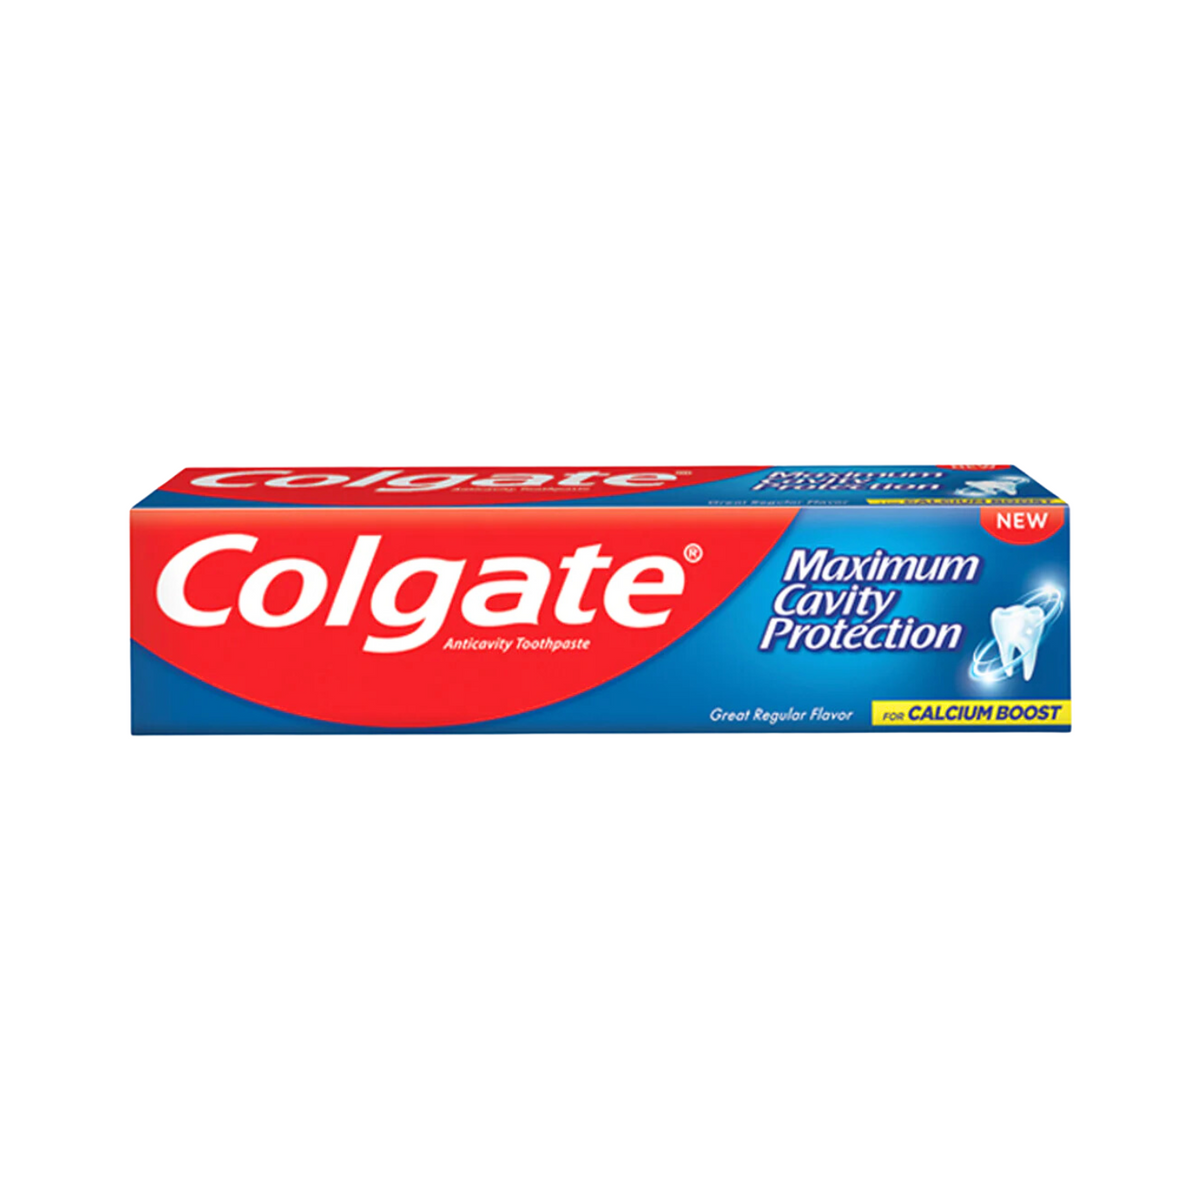 colgate-maximum-cavity-protection-toothpaste-200g